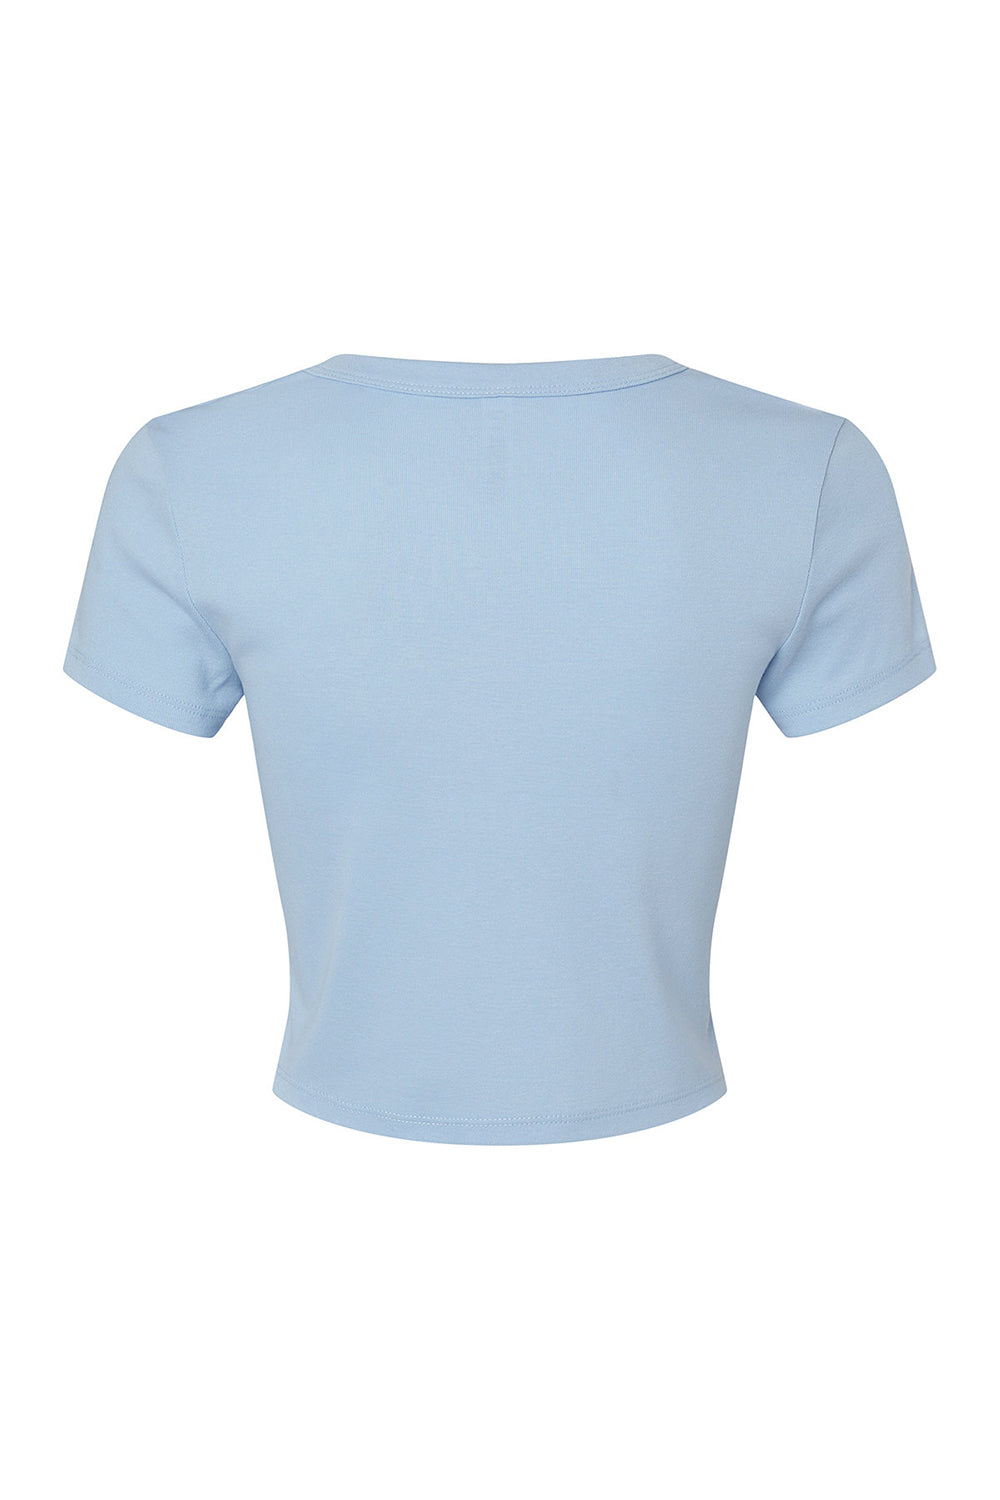 Bella + Canvas 1010BE Womens Micro Ribbed Short Sleeve Crewneck Baby T-Shirt Baby Blue Flat Back